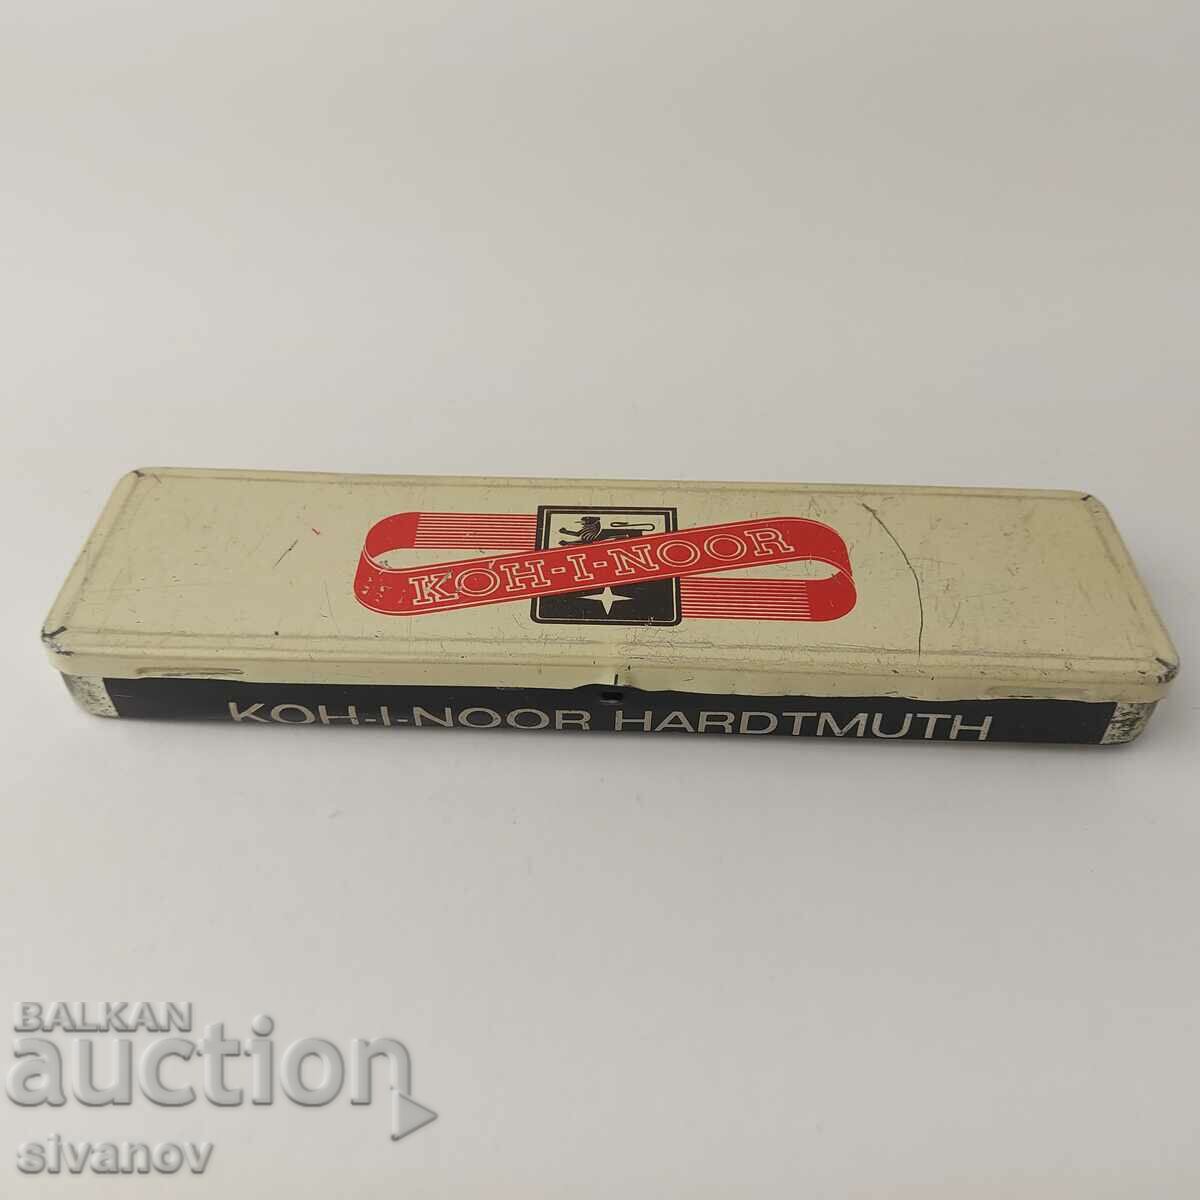 Old Metal Koh-I-Noor Hardtmuth Box Empty #5477